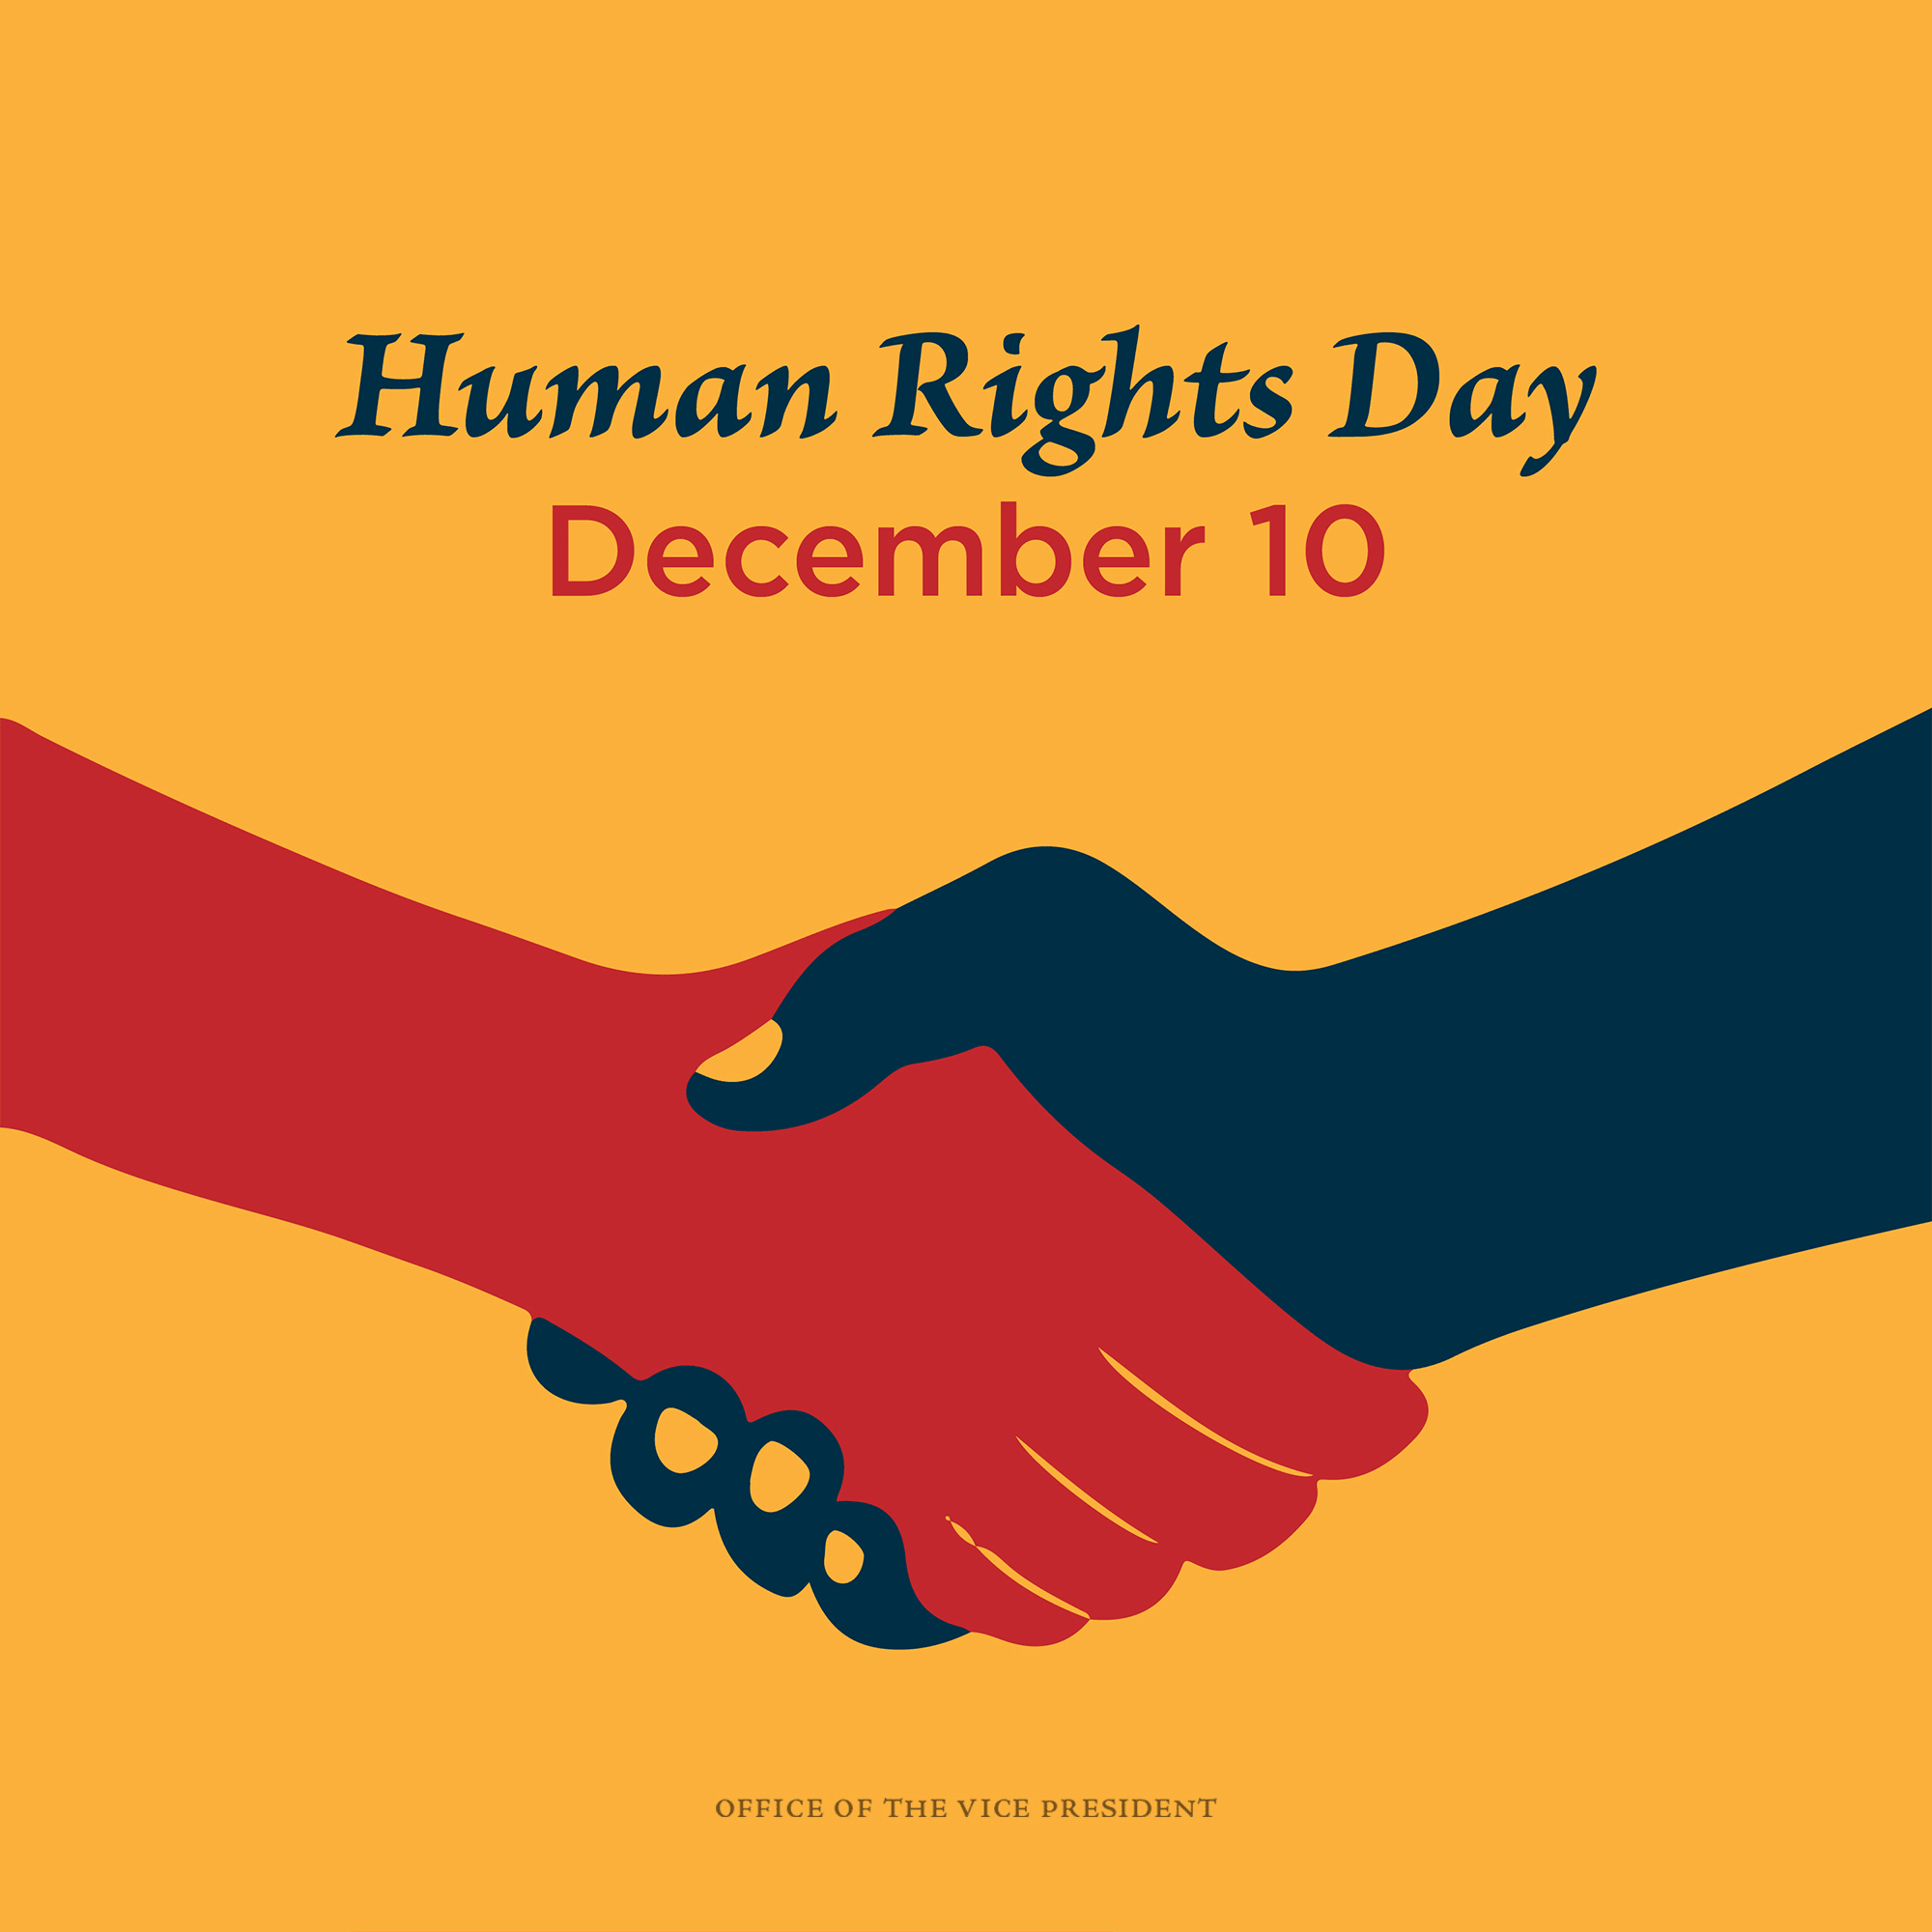 Human org. Human rights. День прав человека. День прав человека рисунок. Basic Human rights.